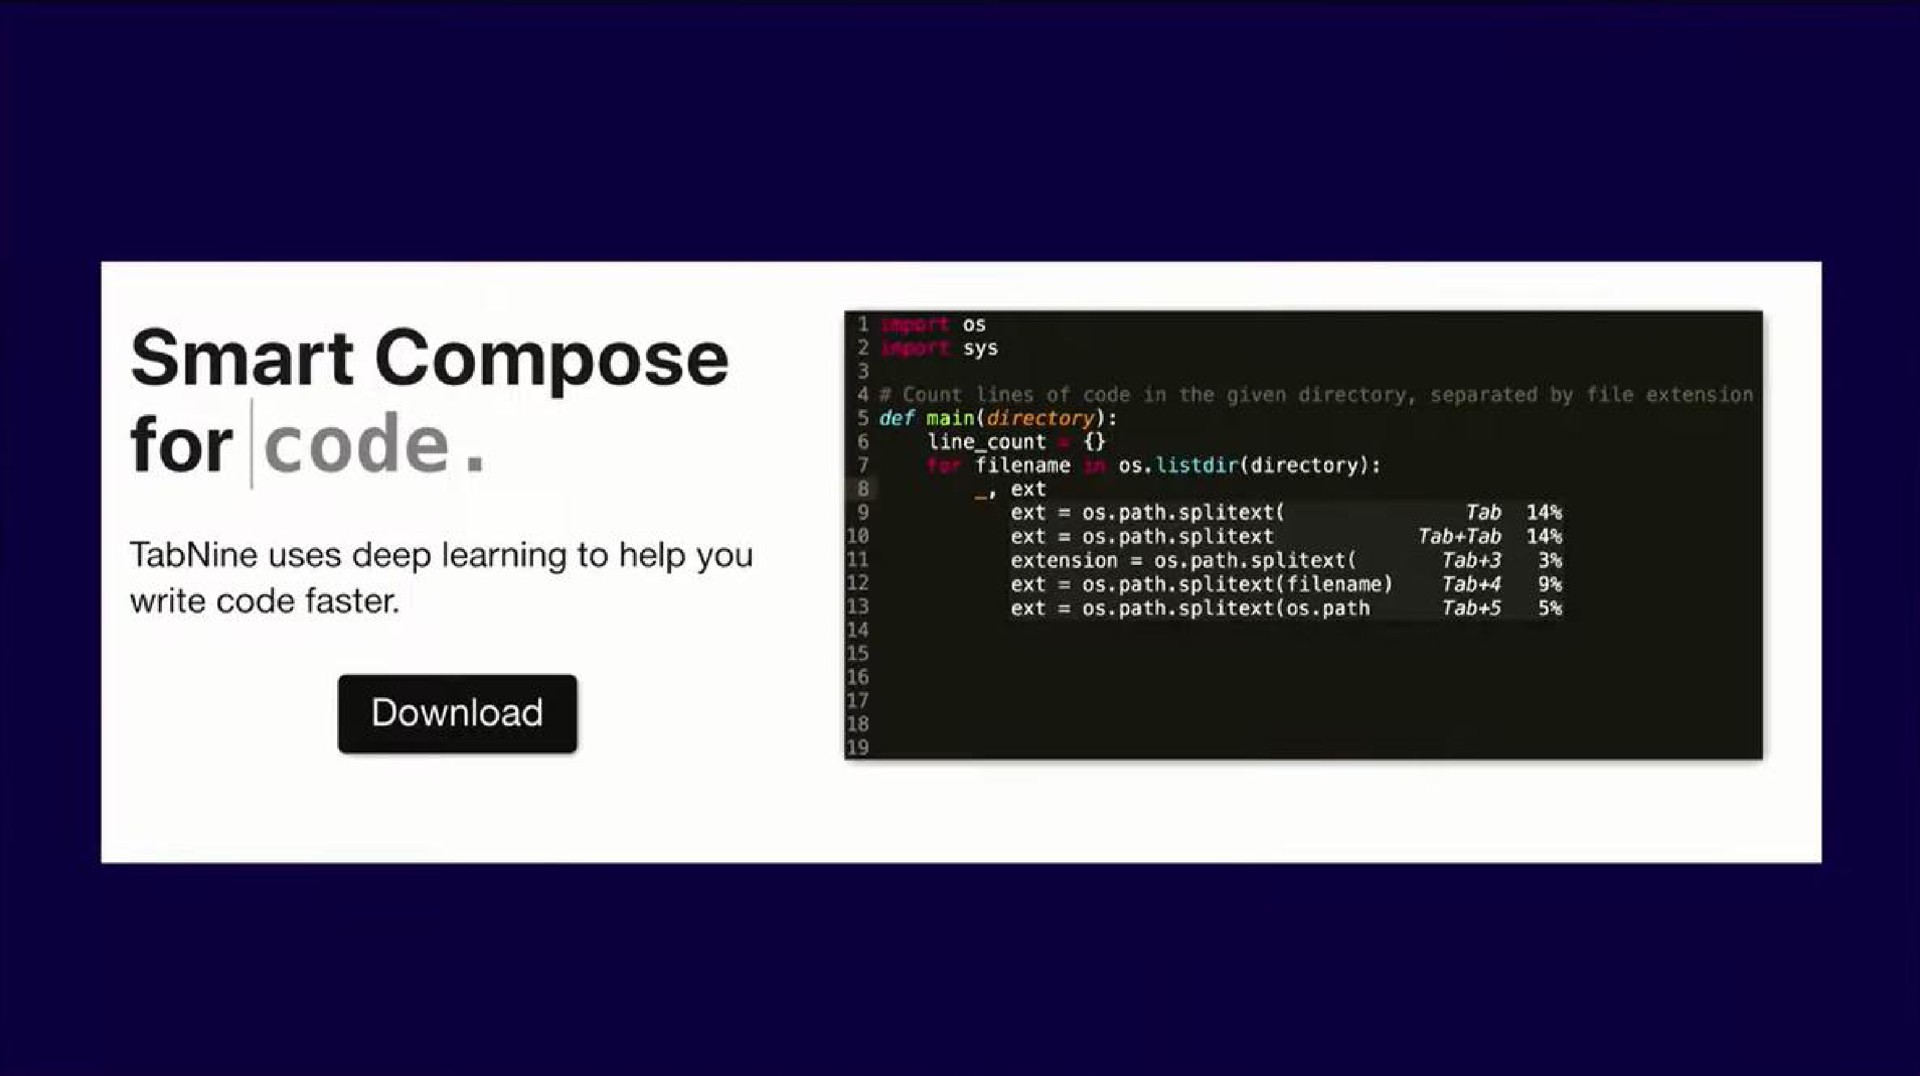 smart compose for code | OpenAI